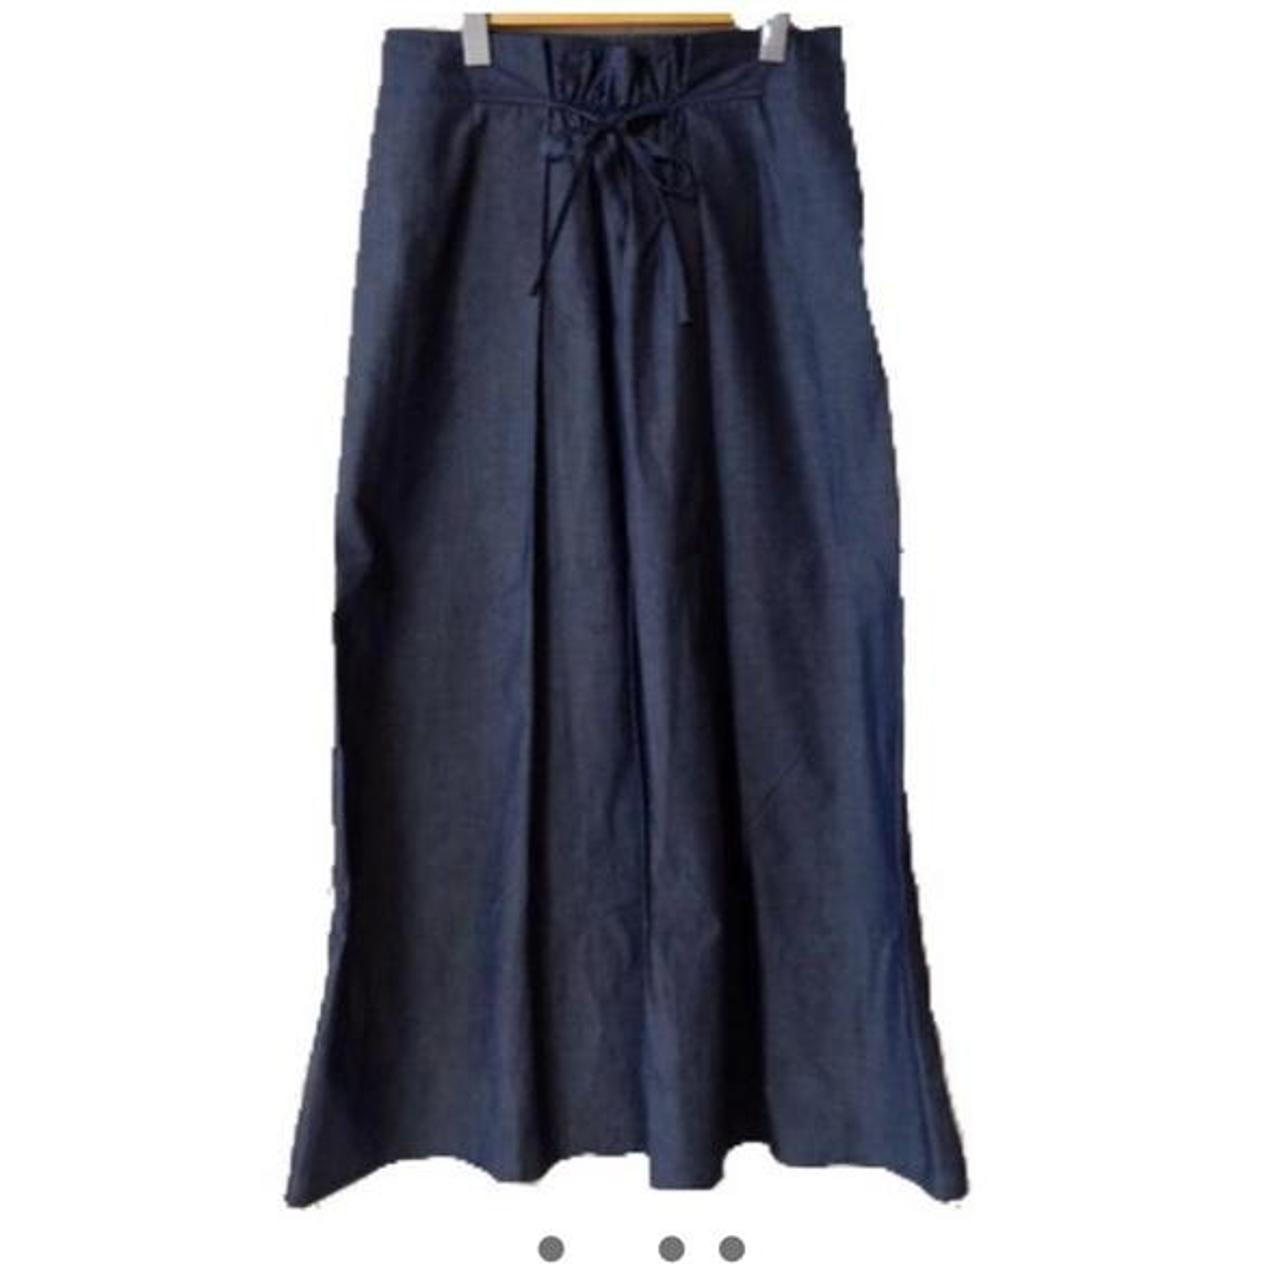 KOOKAÏ Women's Skirt (2)